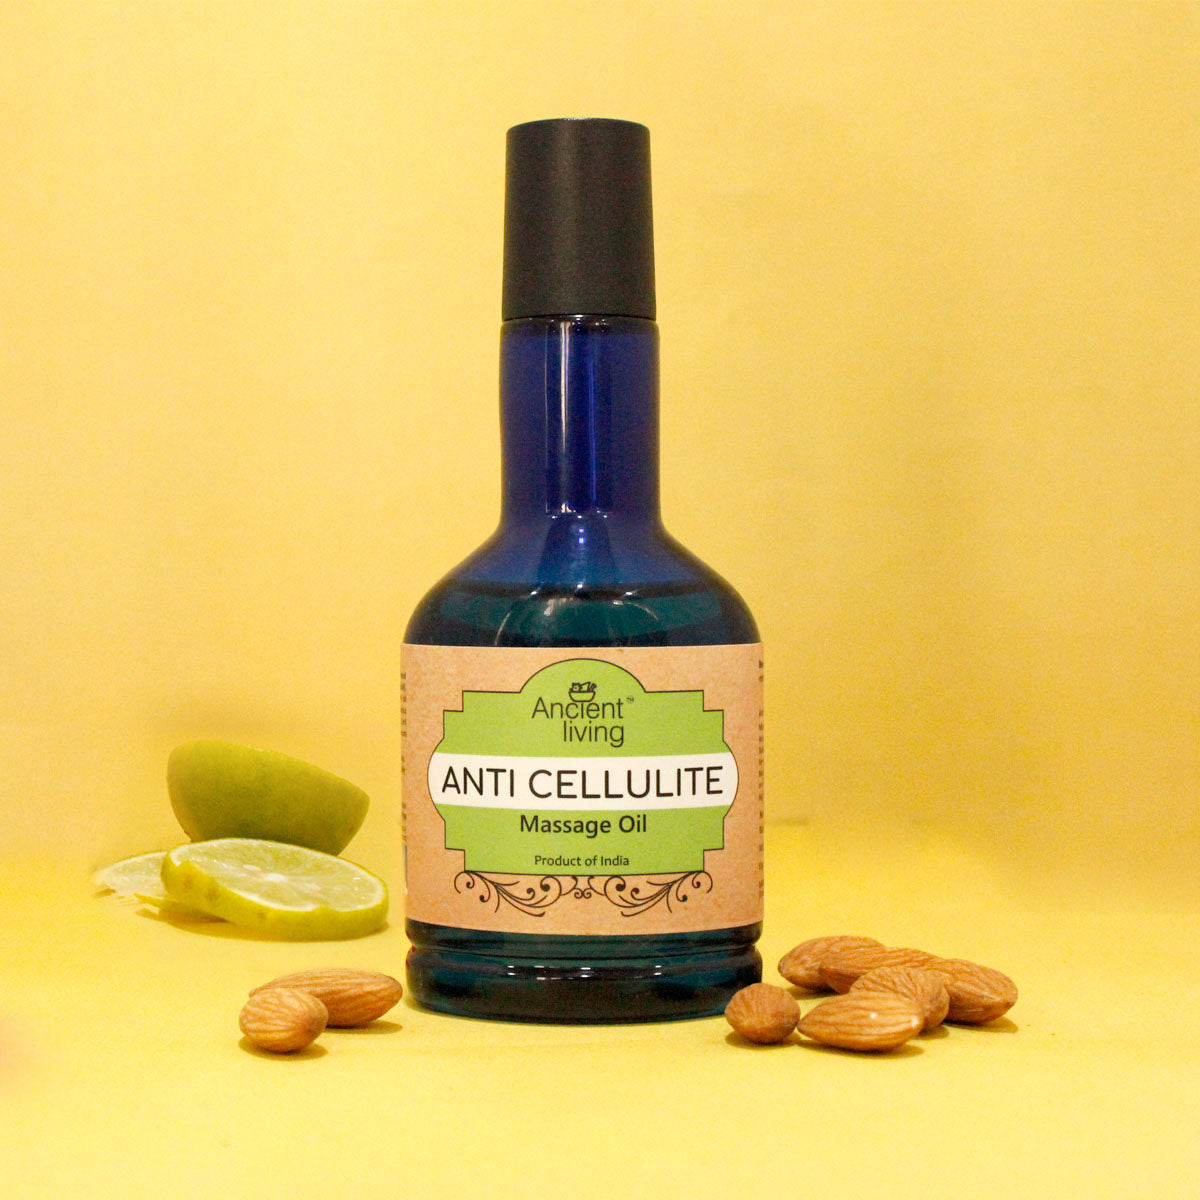 Anti Cellulite Massage Oil - Ancient Living